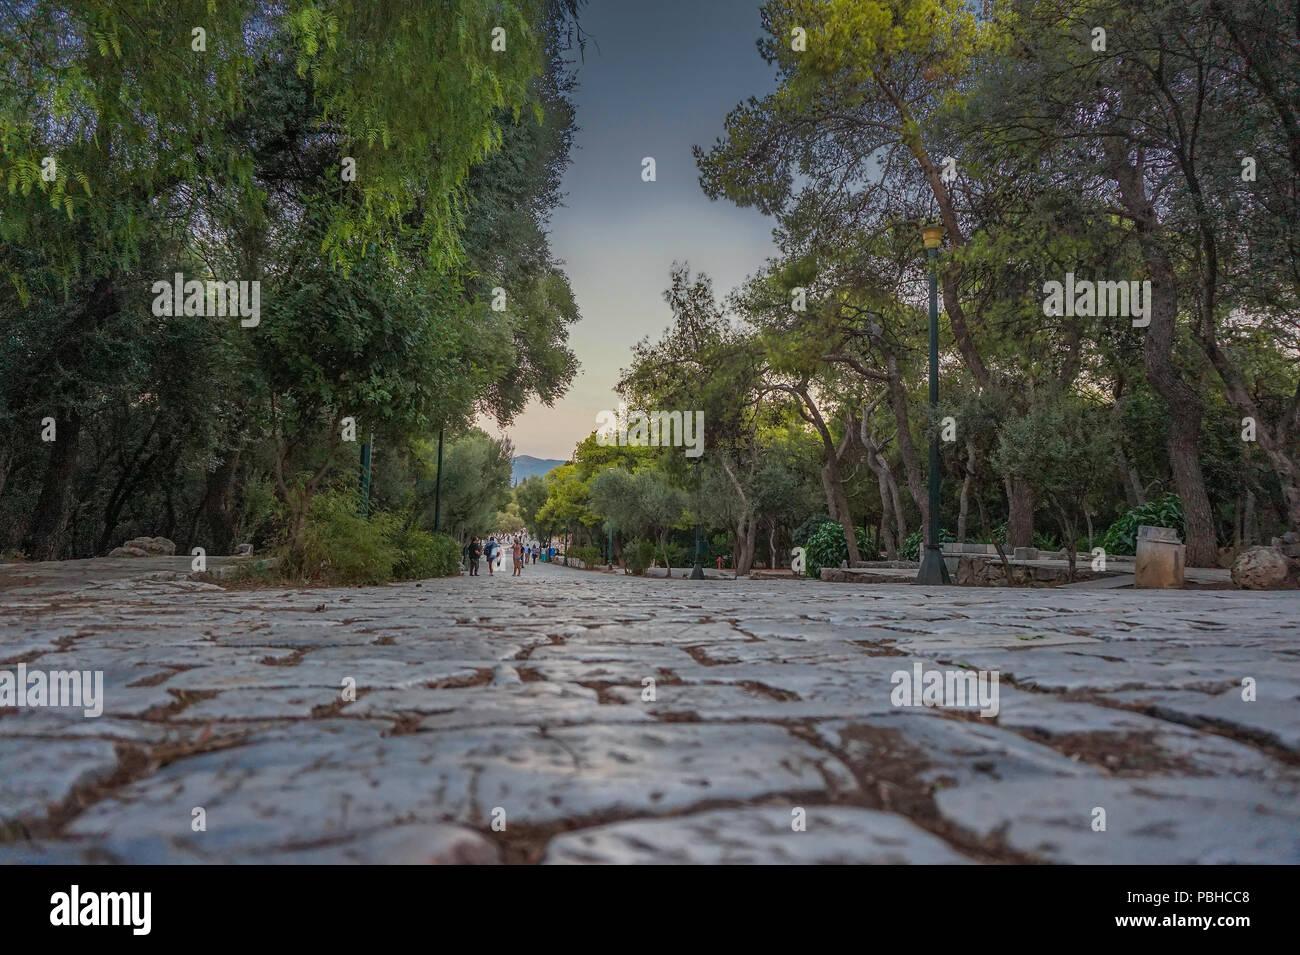 The Paved Areopagitou pedestrian street in Athens near the Acropolis of Athens Stock Photo